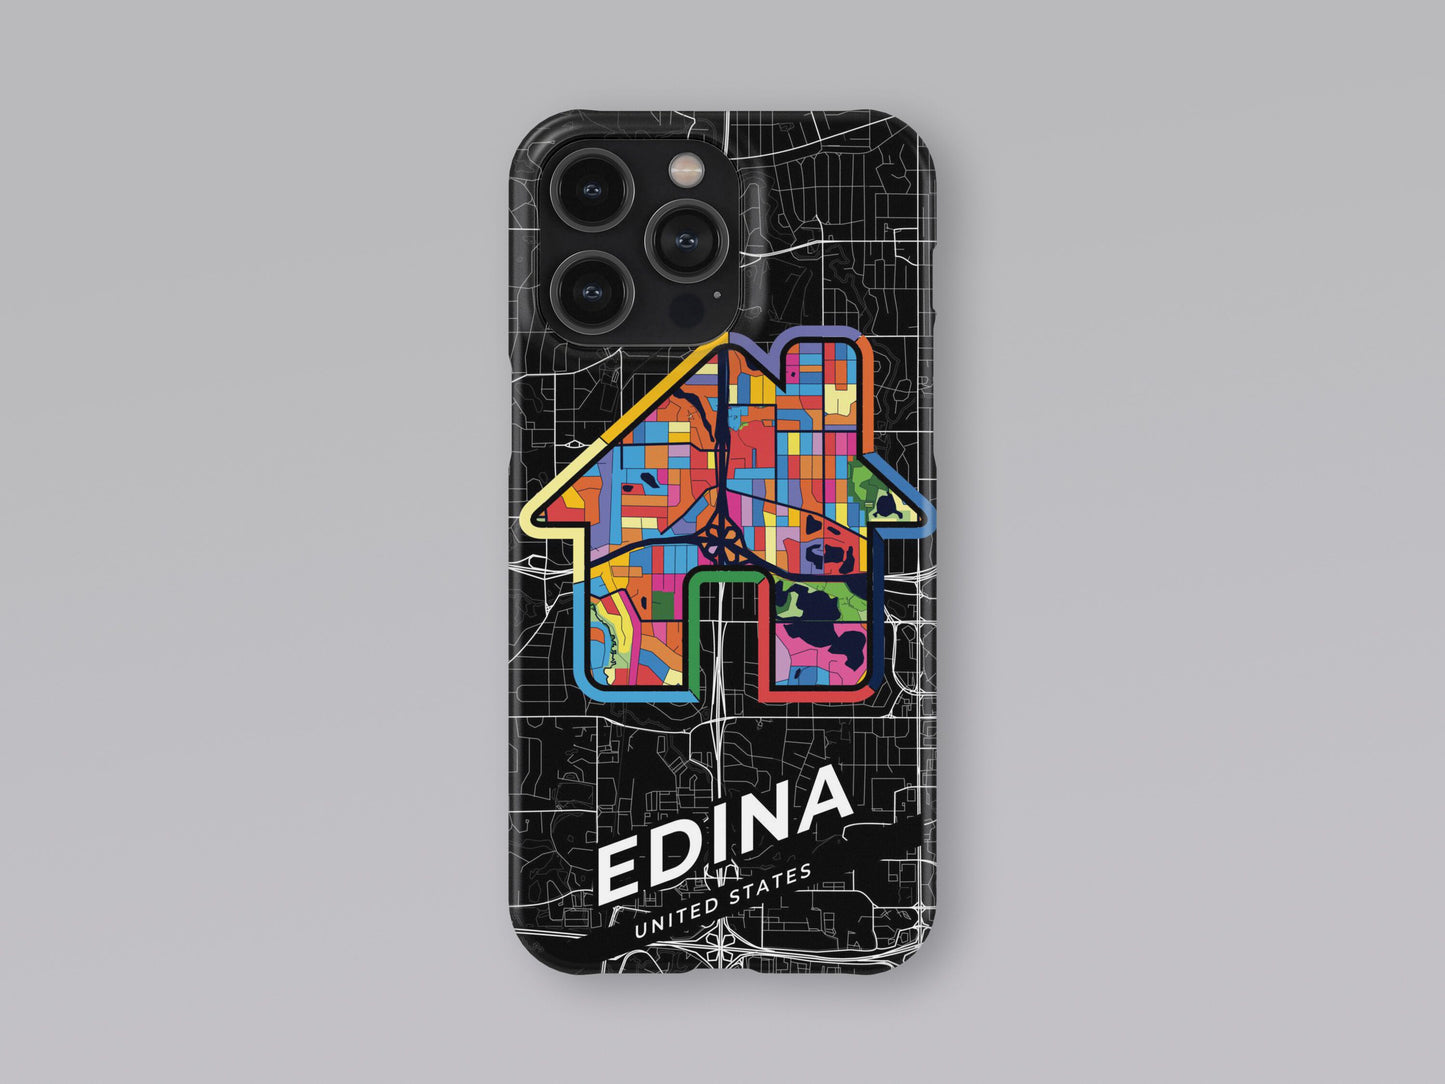 Edina Minnesota slim phone case with colorful icon. Birthday, wedding or housewarming gift. Couple match cases. 3